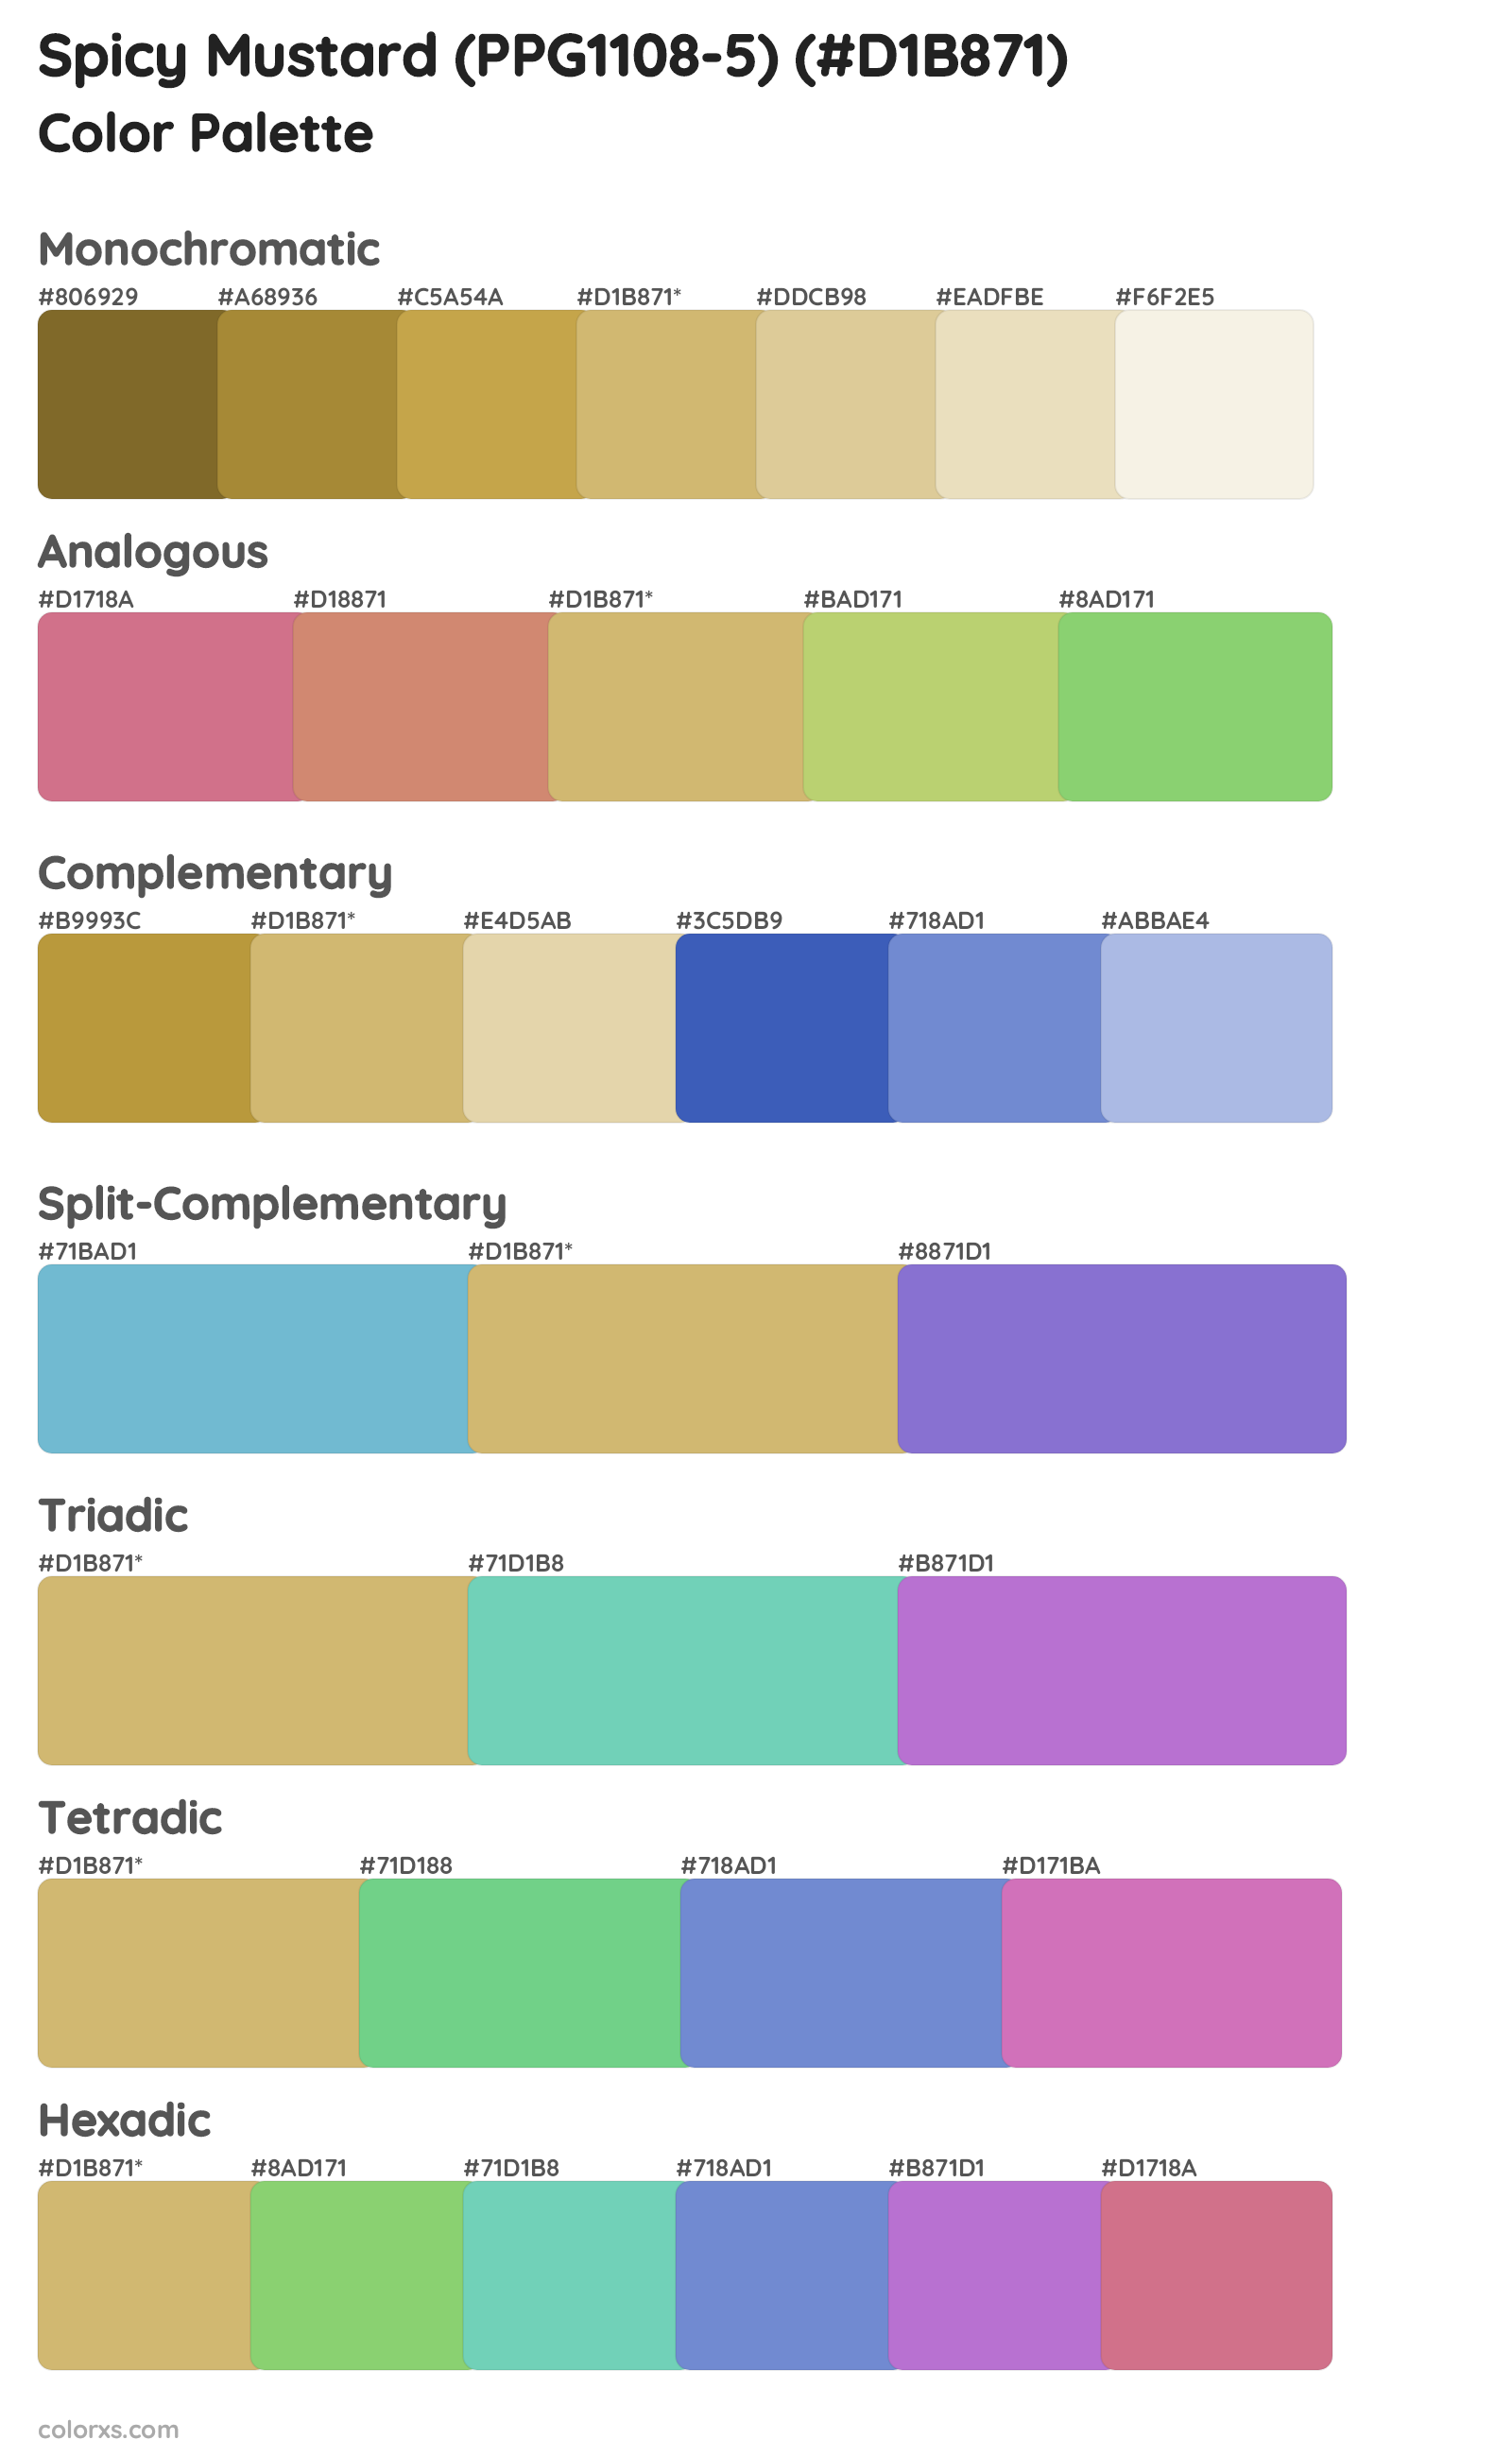 Spicy Mustard (PPG1108-5) Color Scheme Palettes